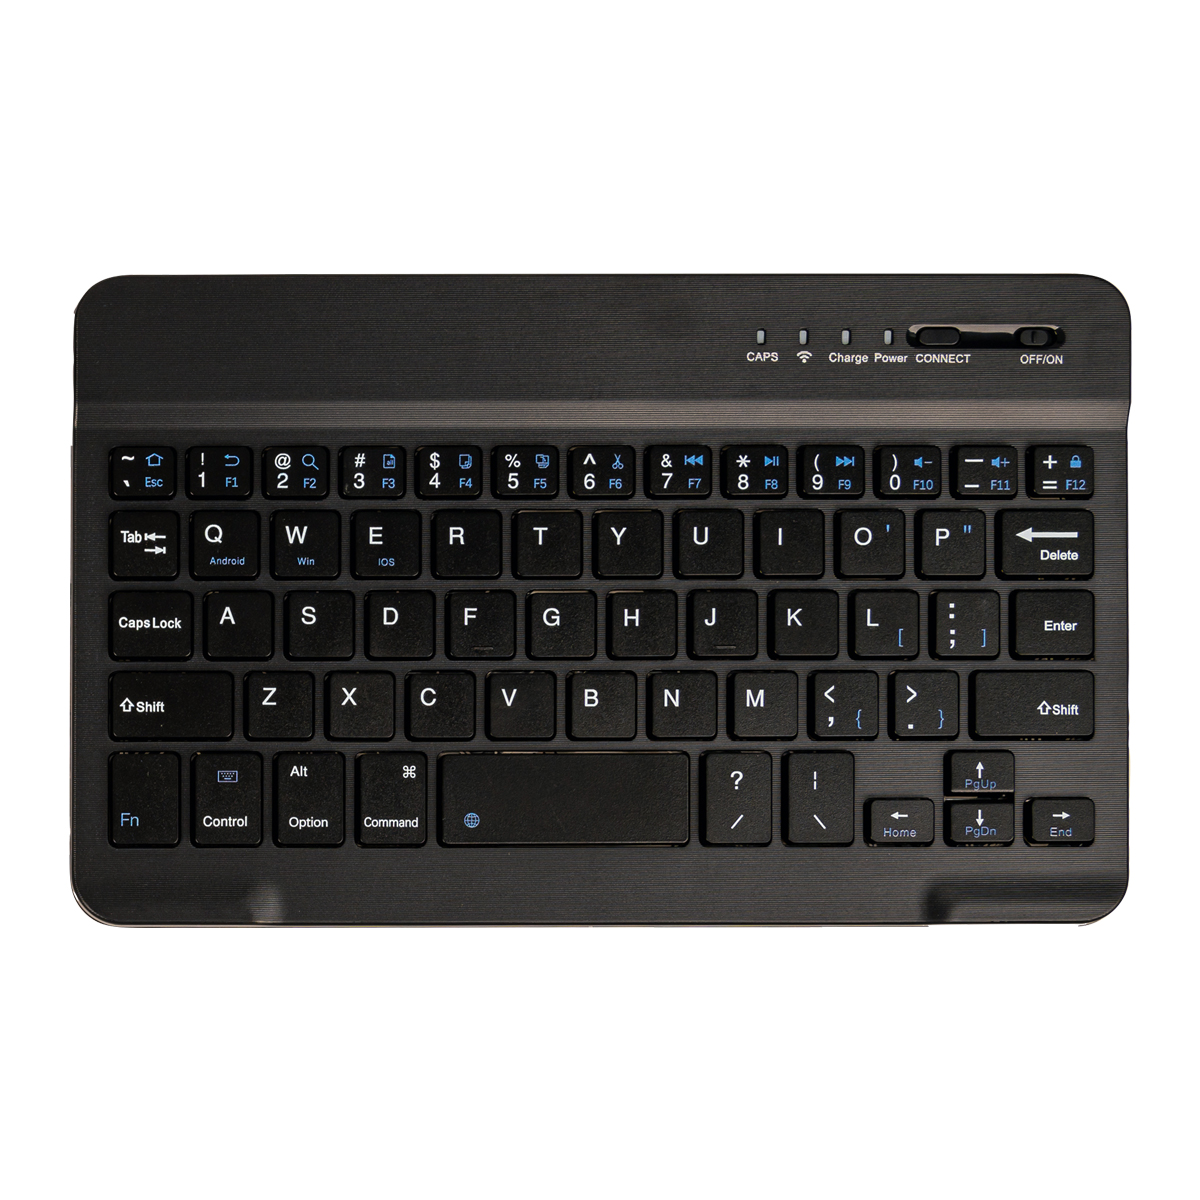 Durano Wireless Keyboard Product Image